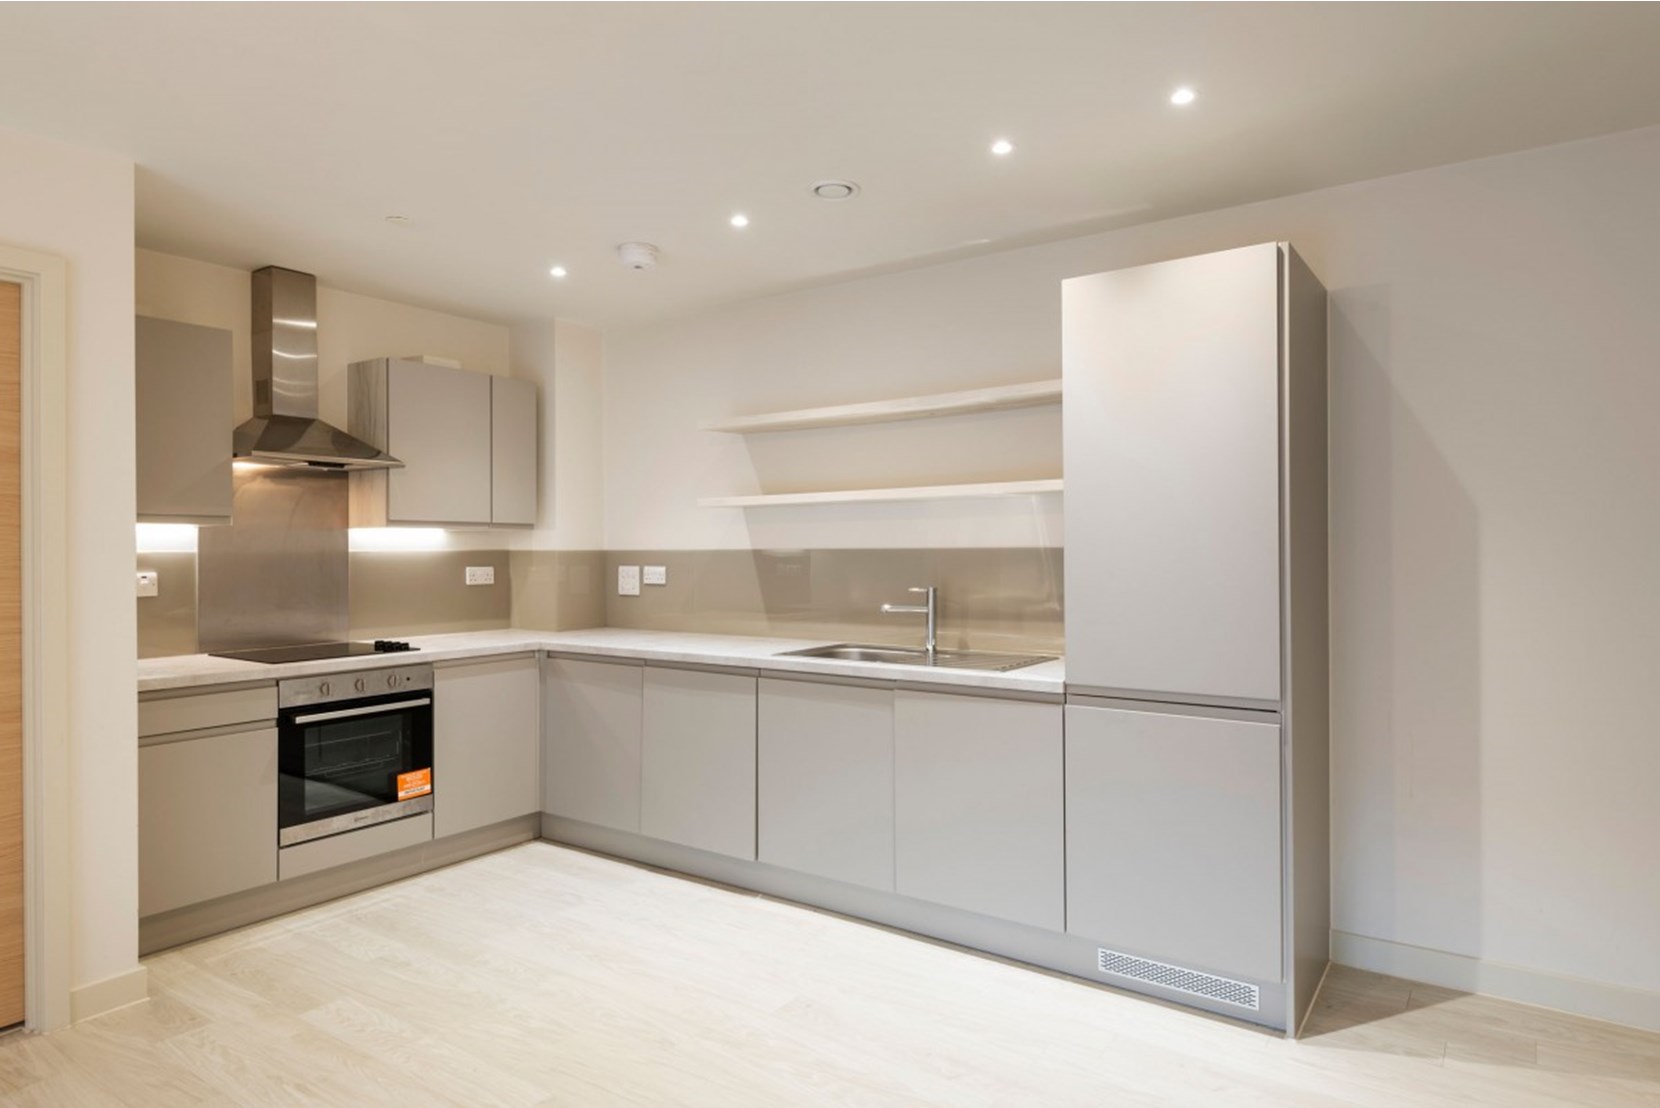 Apartment-Allsop-The-Trilogy-Manchester-interior-kitchen